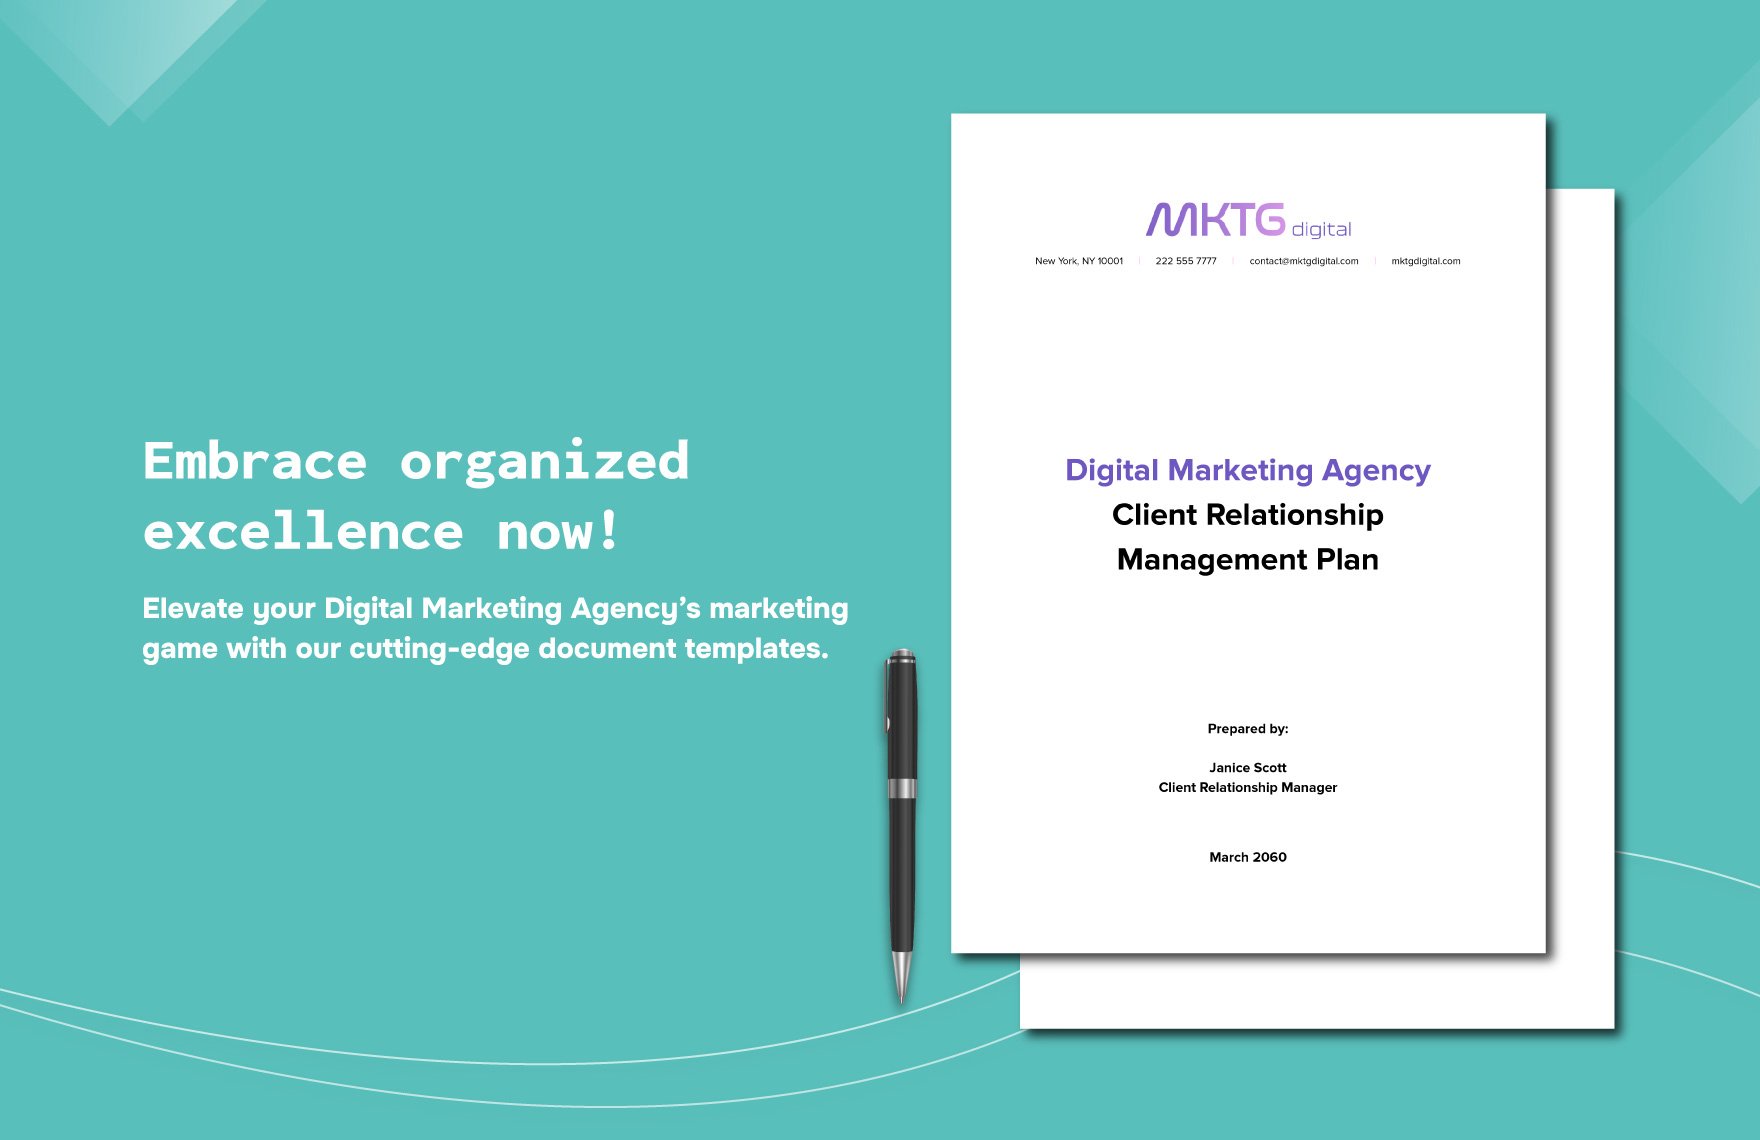 Digital Marketing Agency Client Relationship Management Plan Template